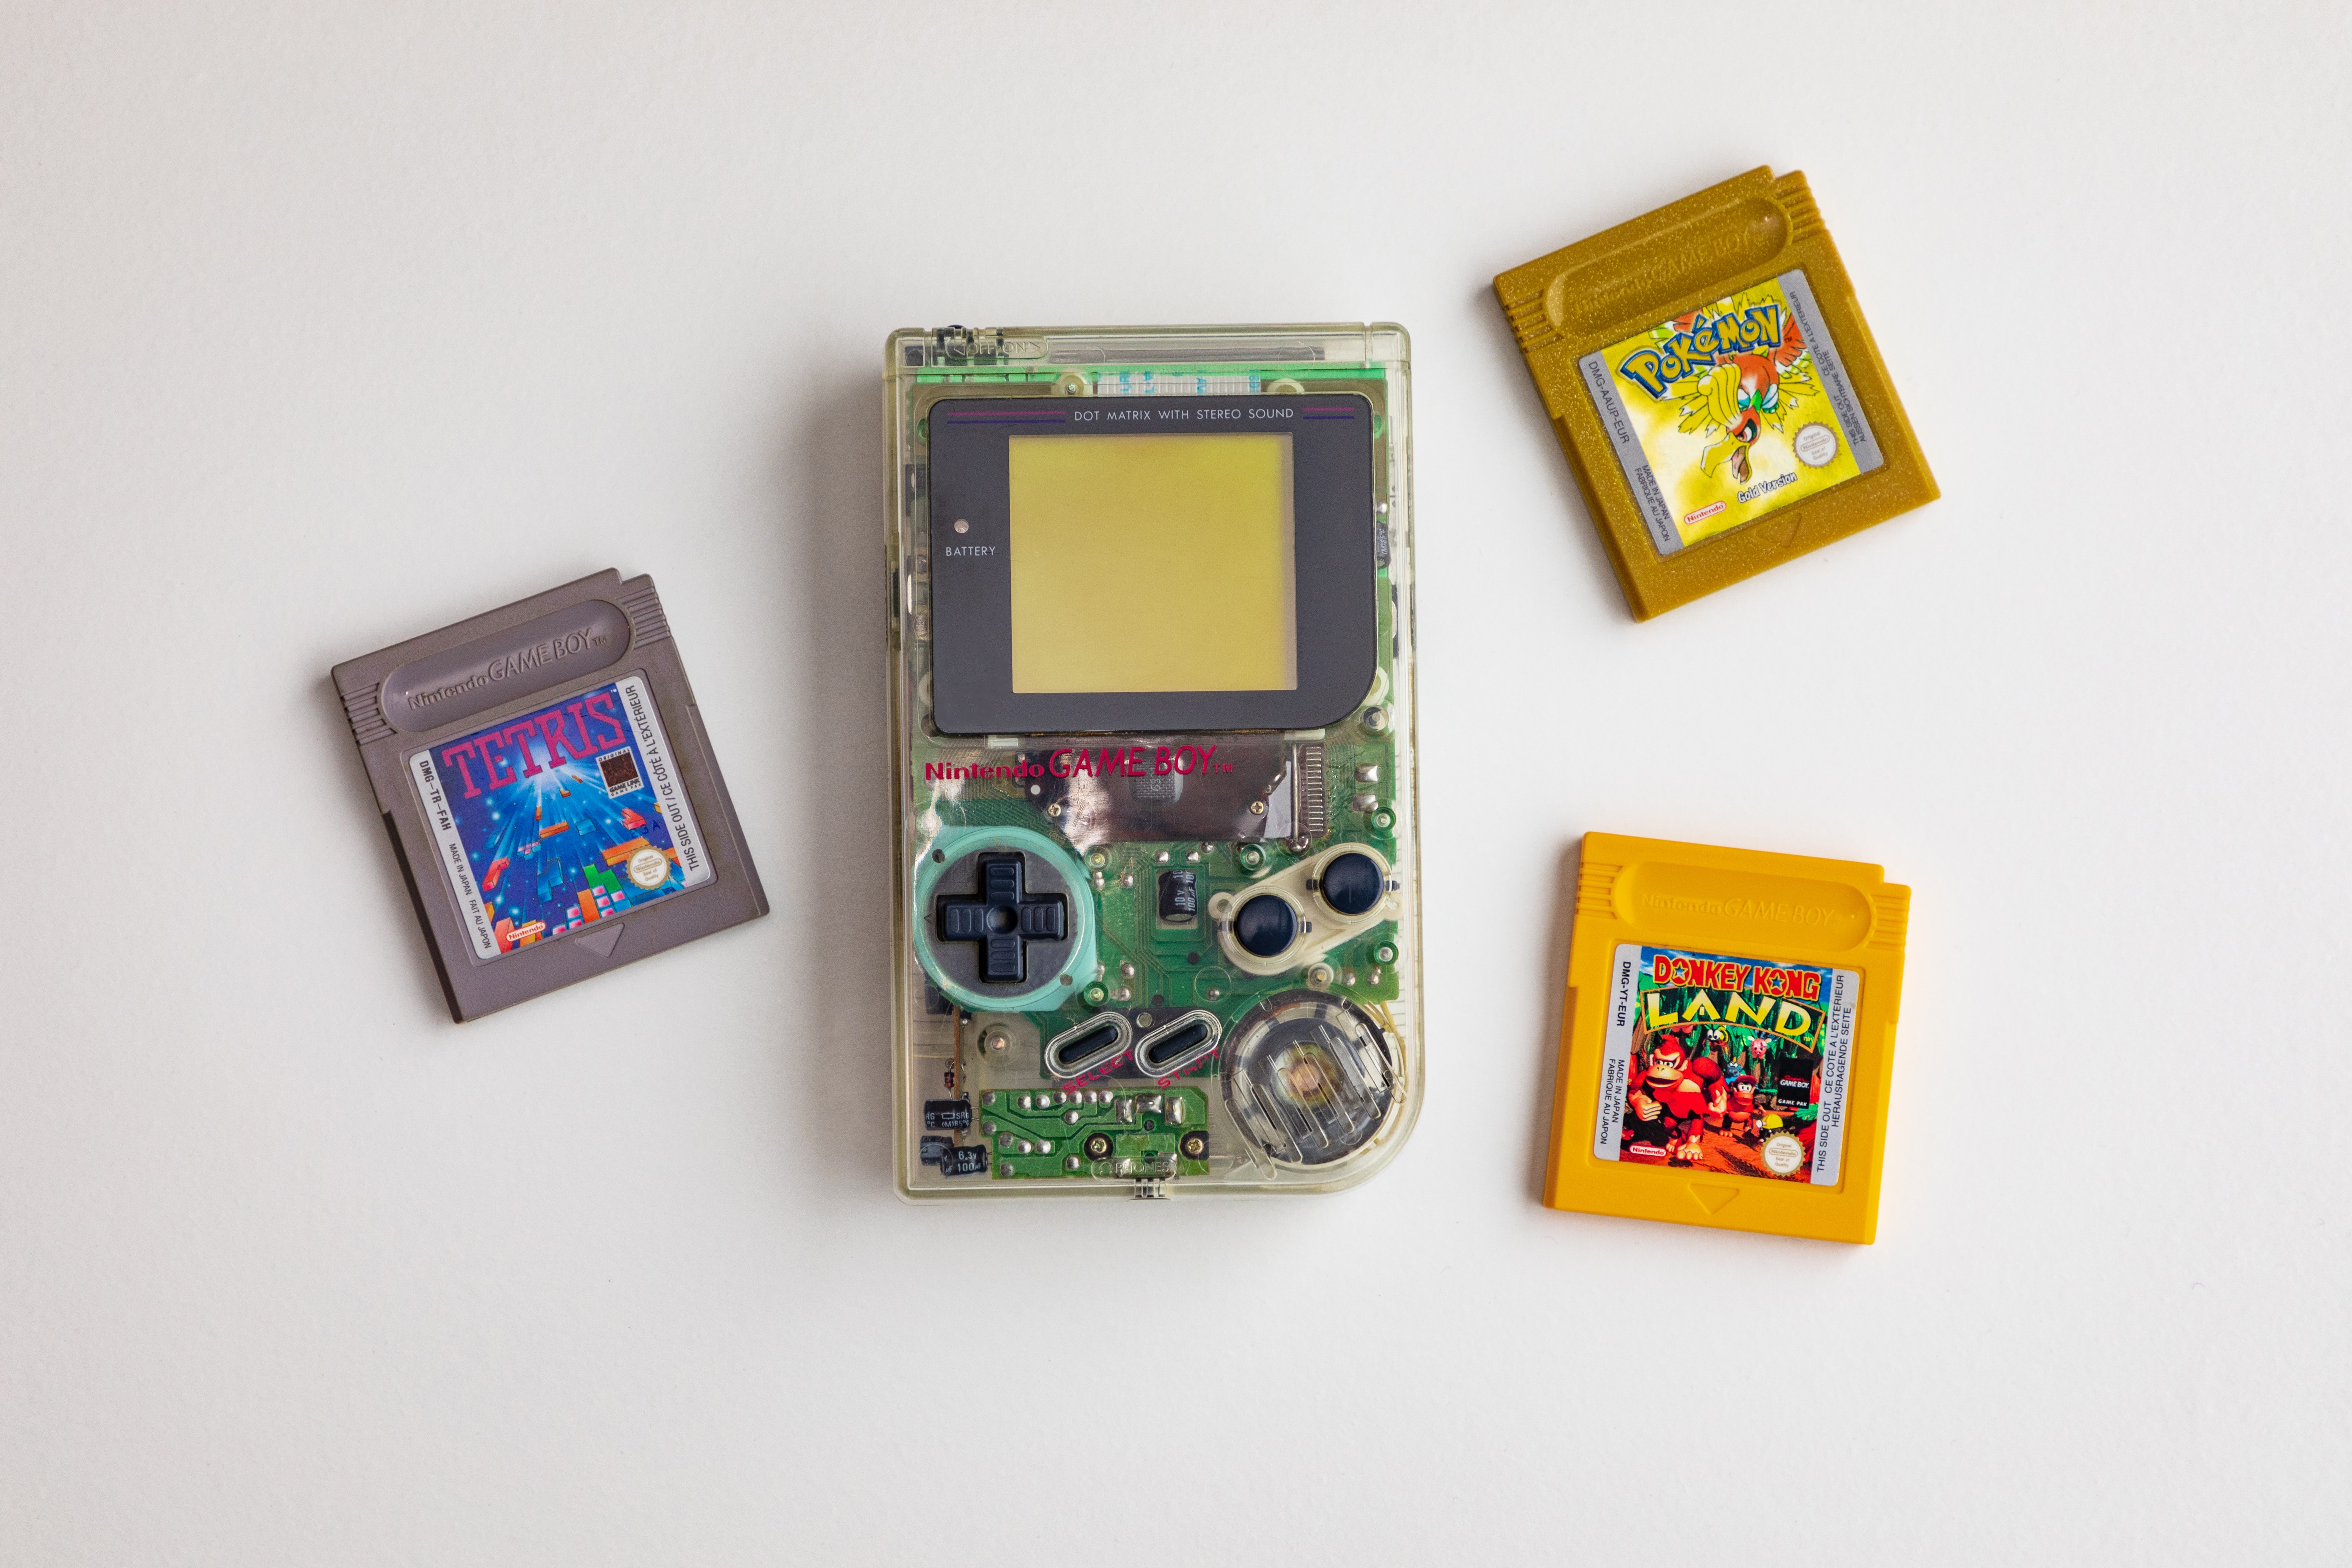 Pure nostalgie: herken jij deze apps uit je jeugd nog?